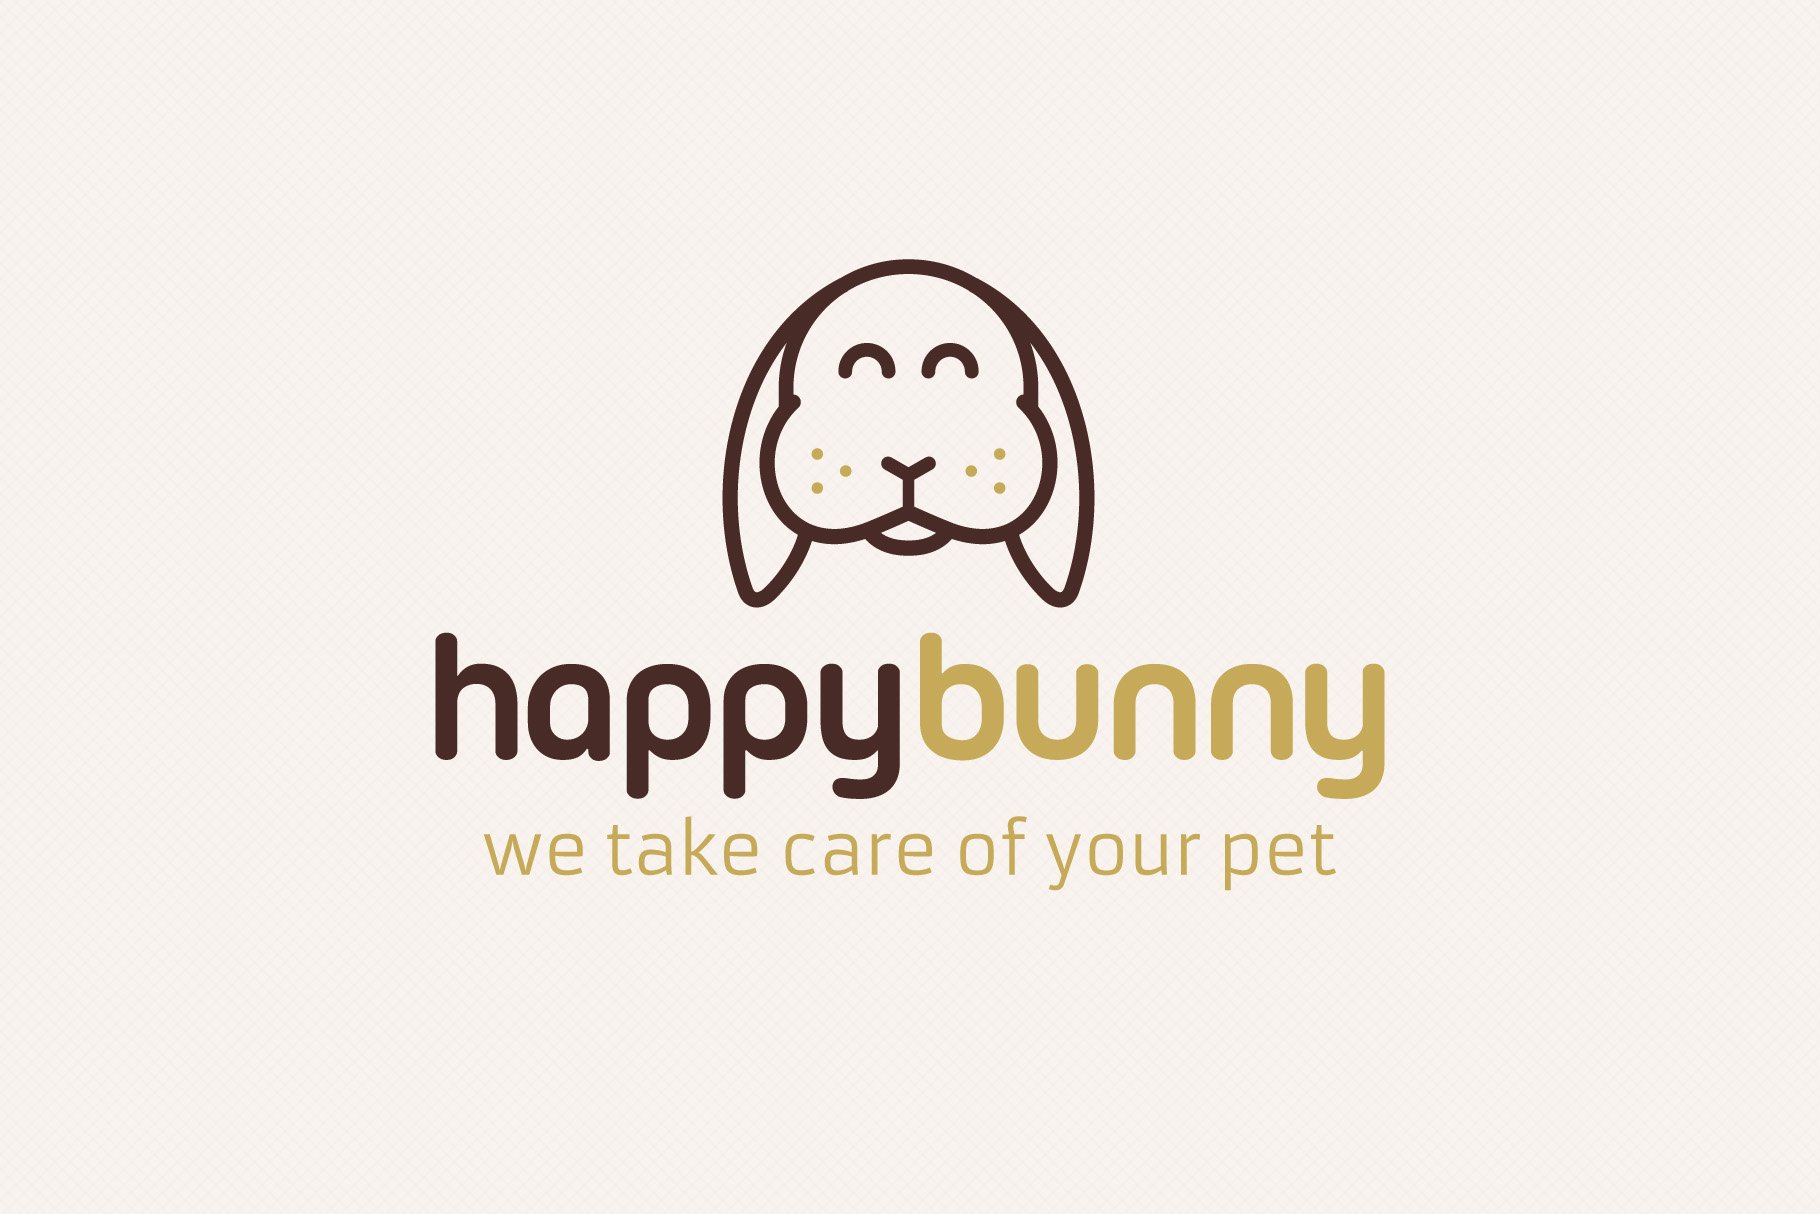 Happy Bunny Logo cover image.